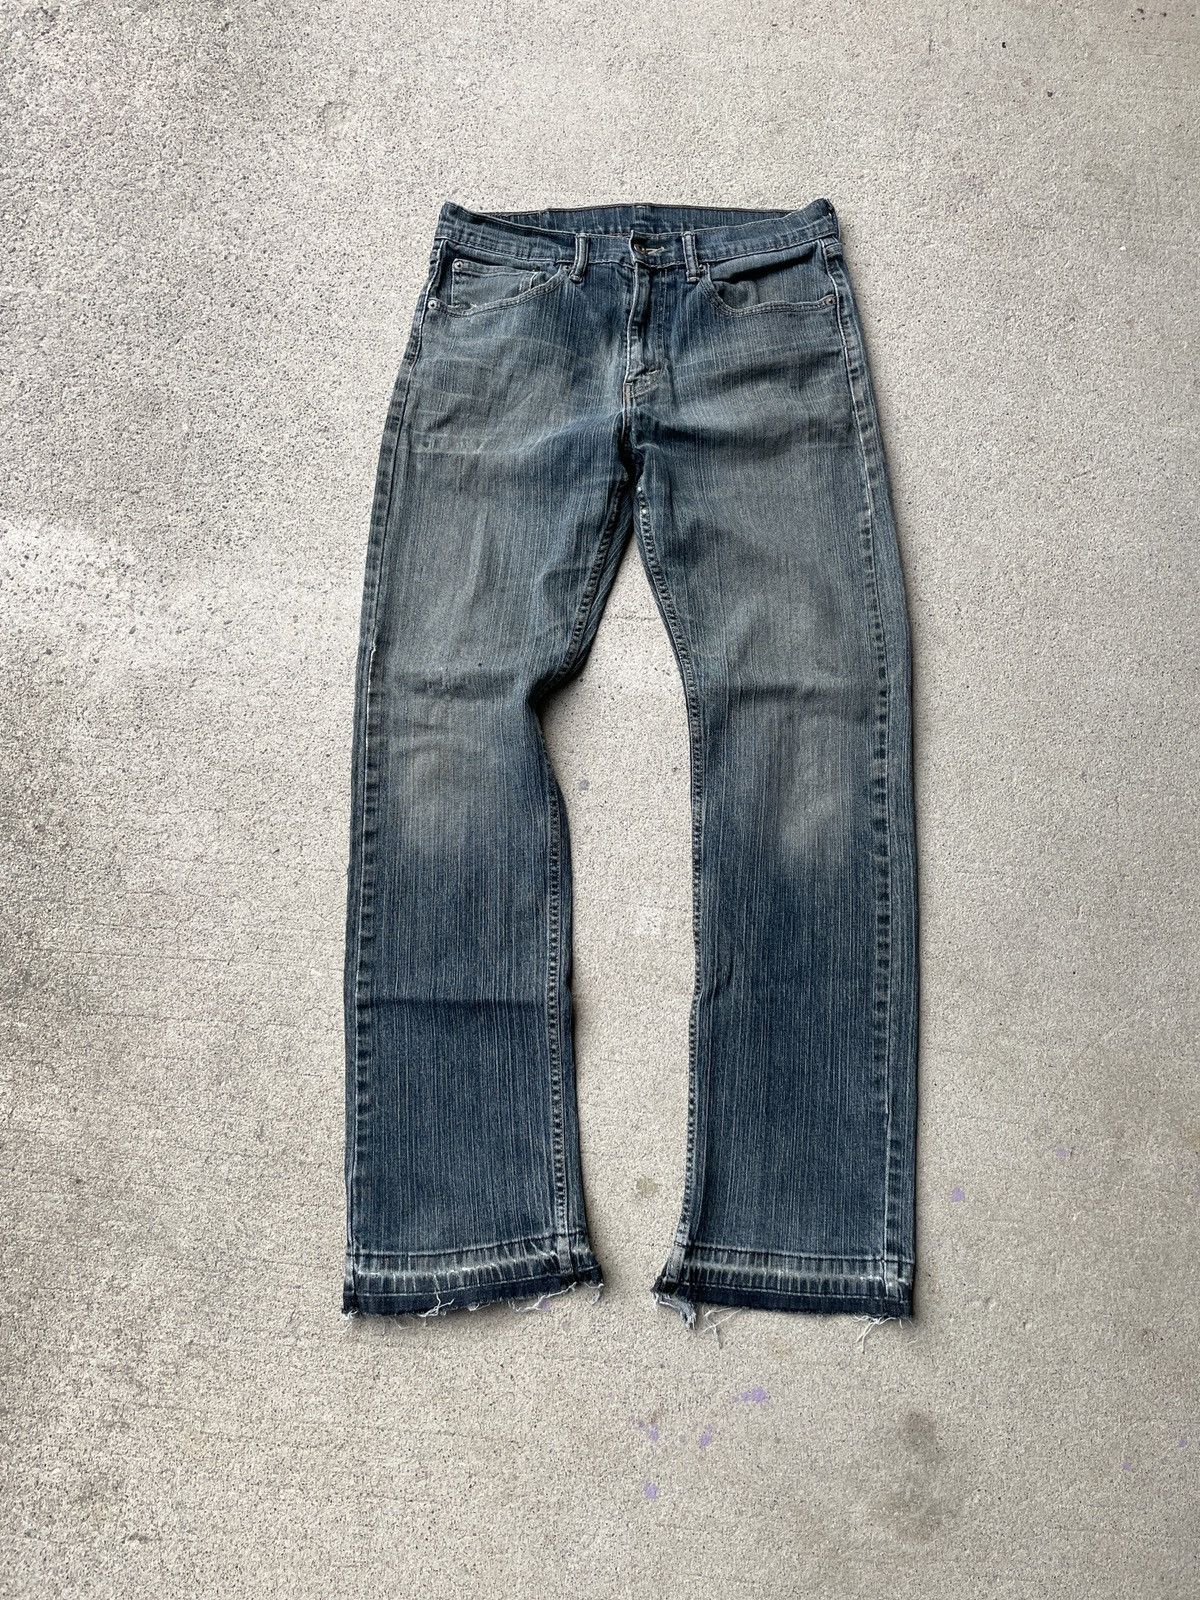 Vintage Mudwash Denim Levis 505 Released Hem Heelbite Jeans | Grailed